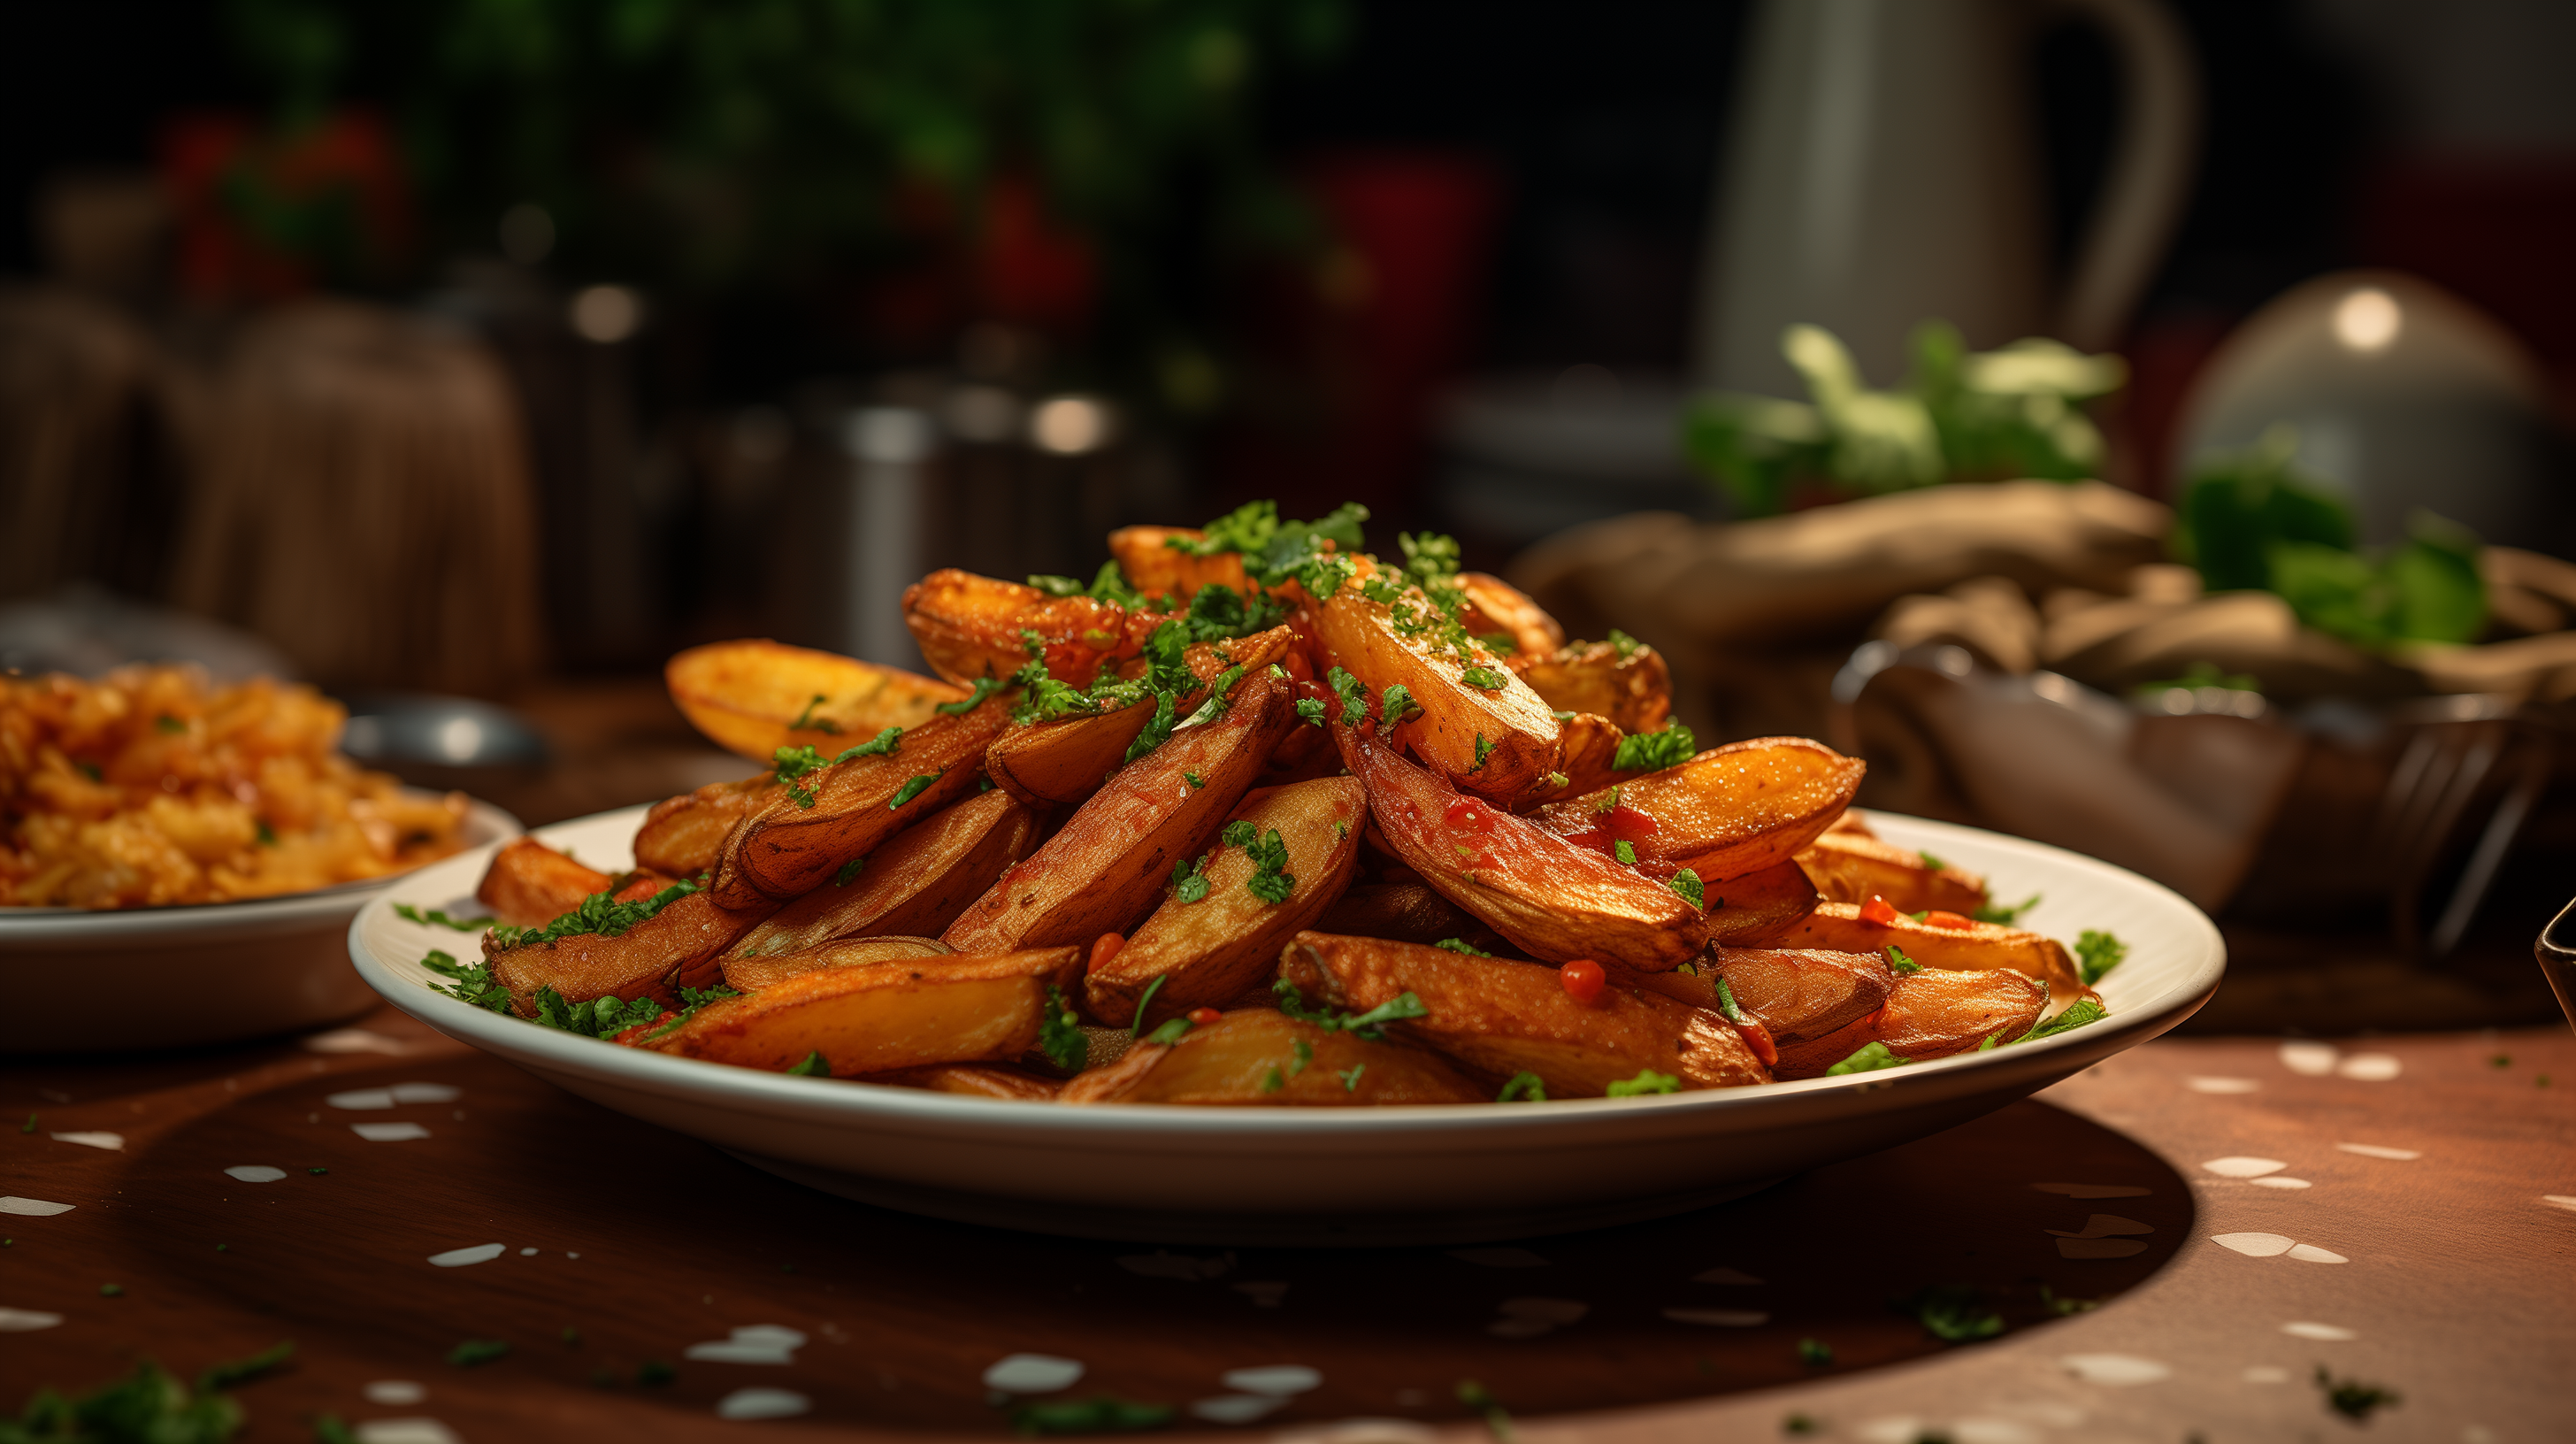 Image of sriracha-flavored russet potato fries.